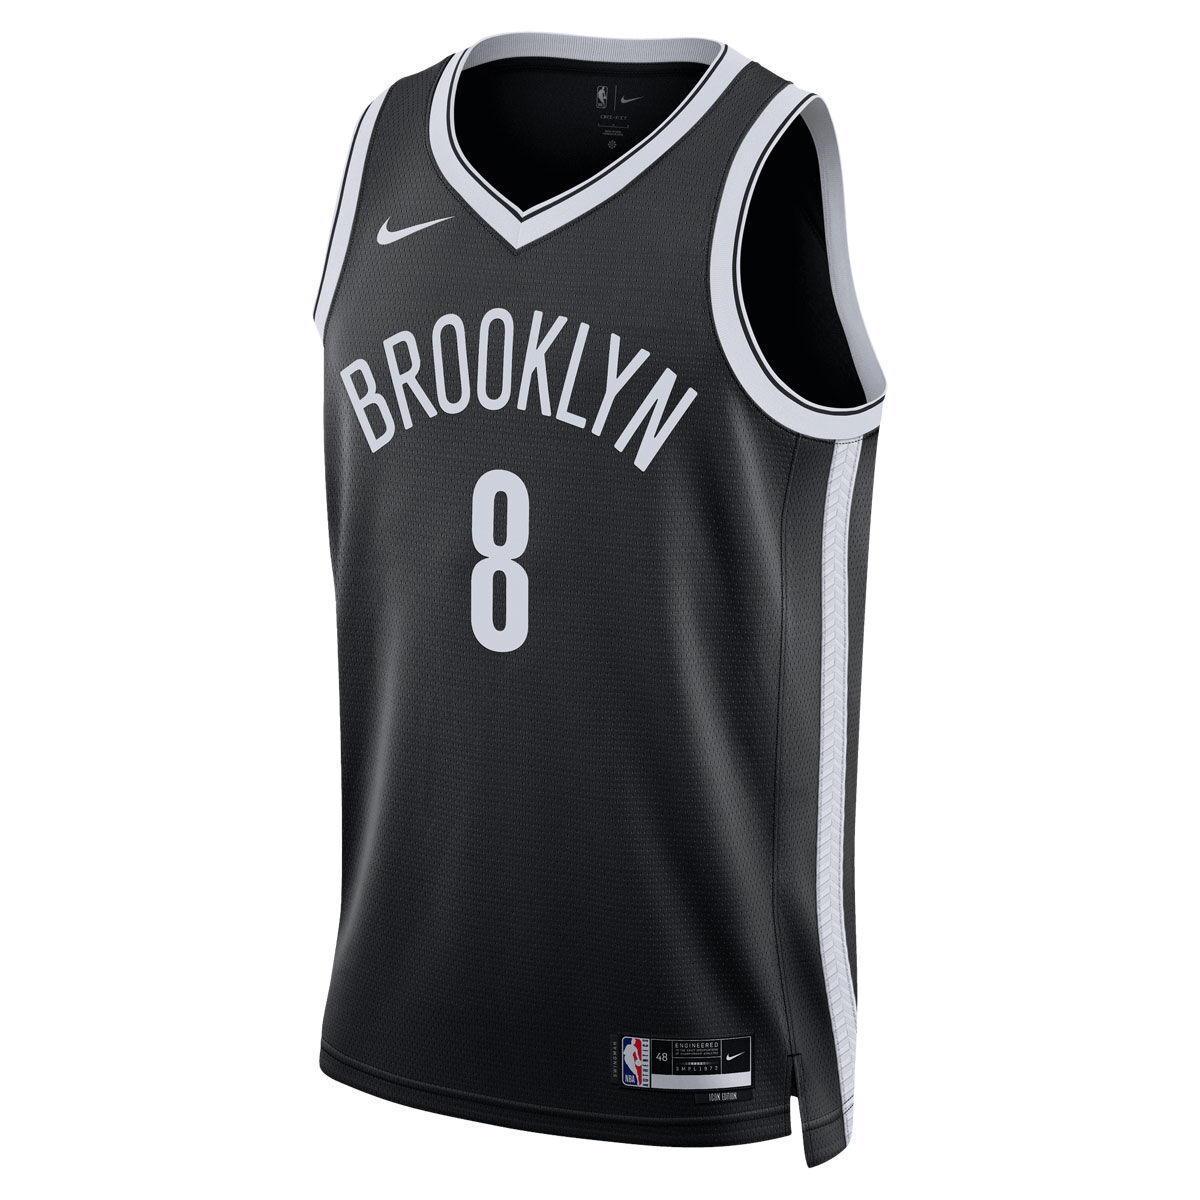 Black Firday Nike NBA Brooklyn Nets Showtime Hoodie Sort/ Best